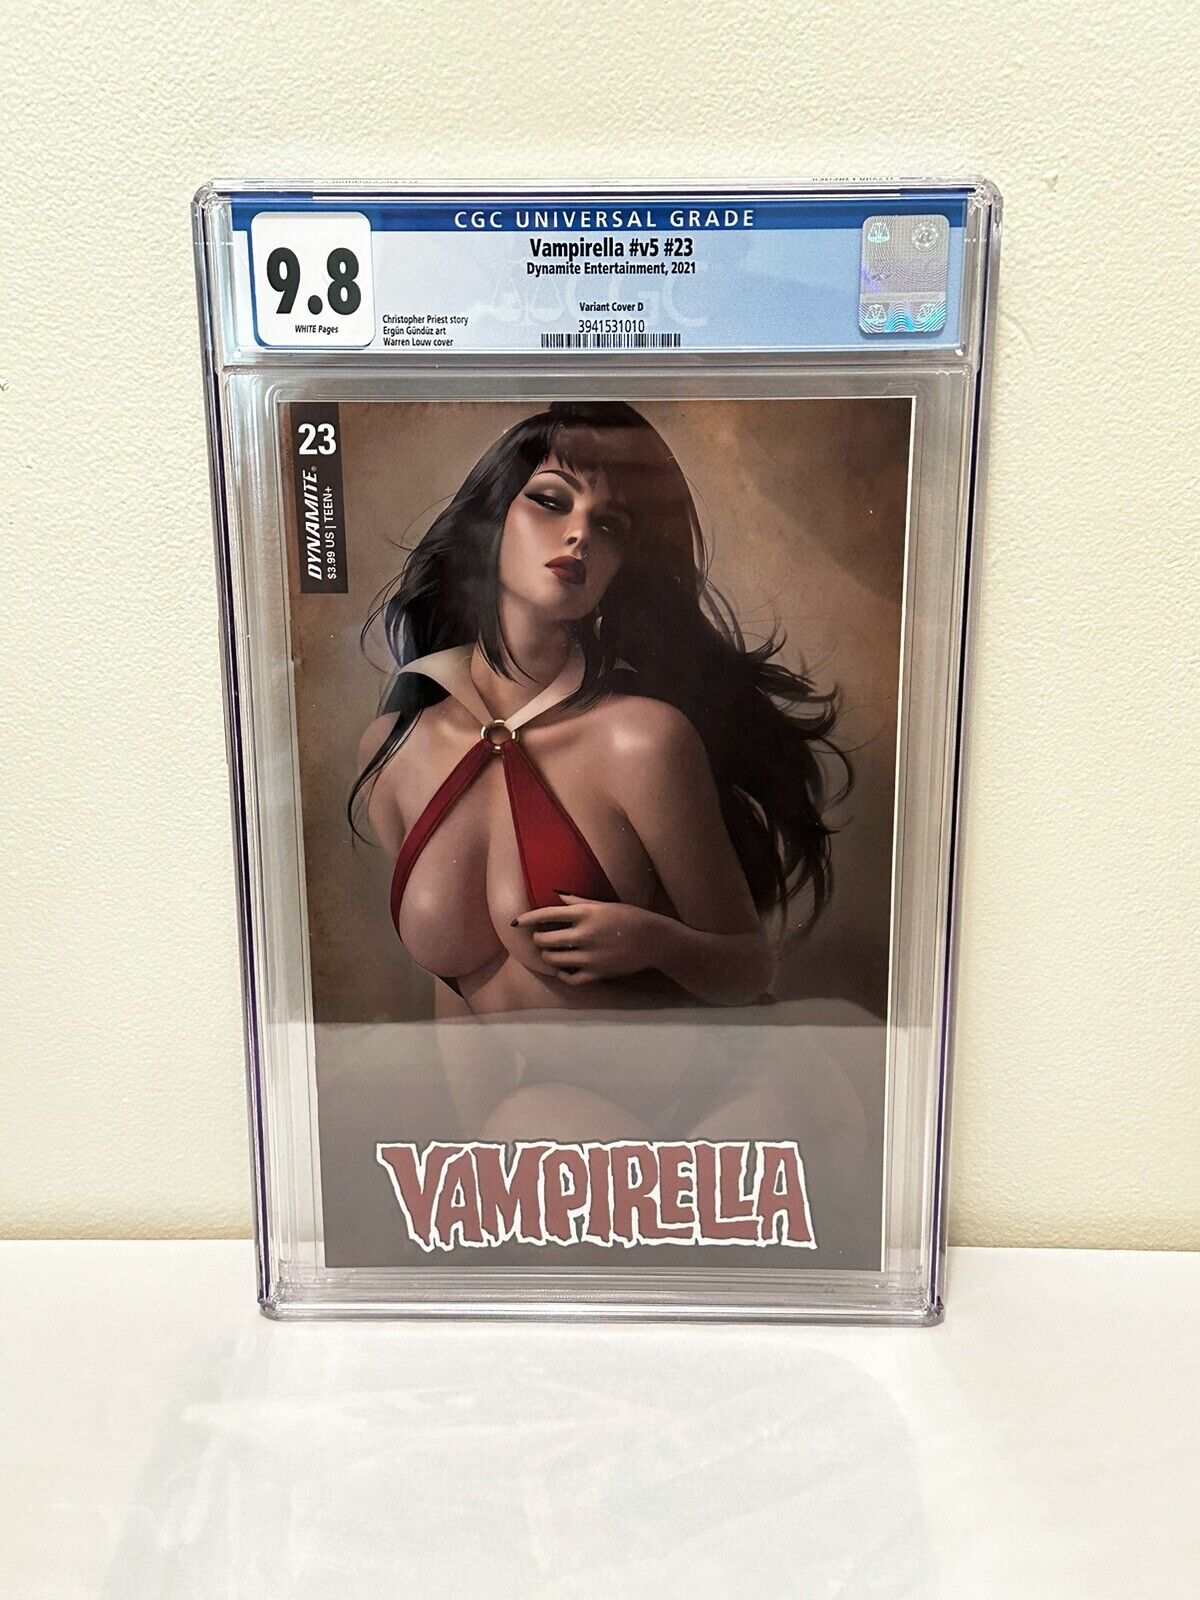 Vampirella Issue #v5 #23 2021, CGC 9.8, Louw Cover, Variant Cover D,